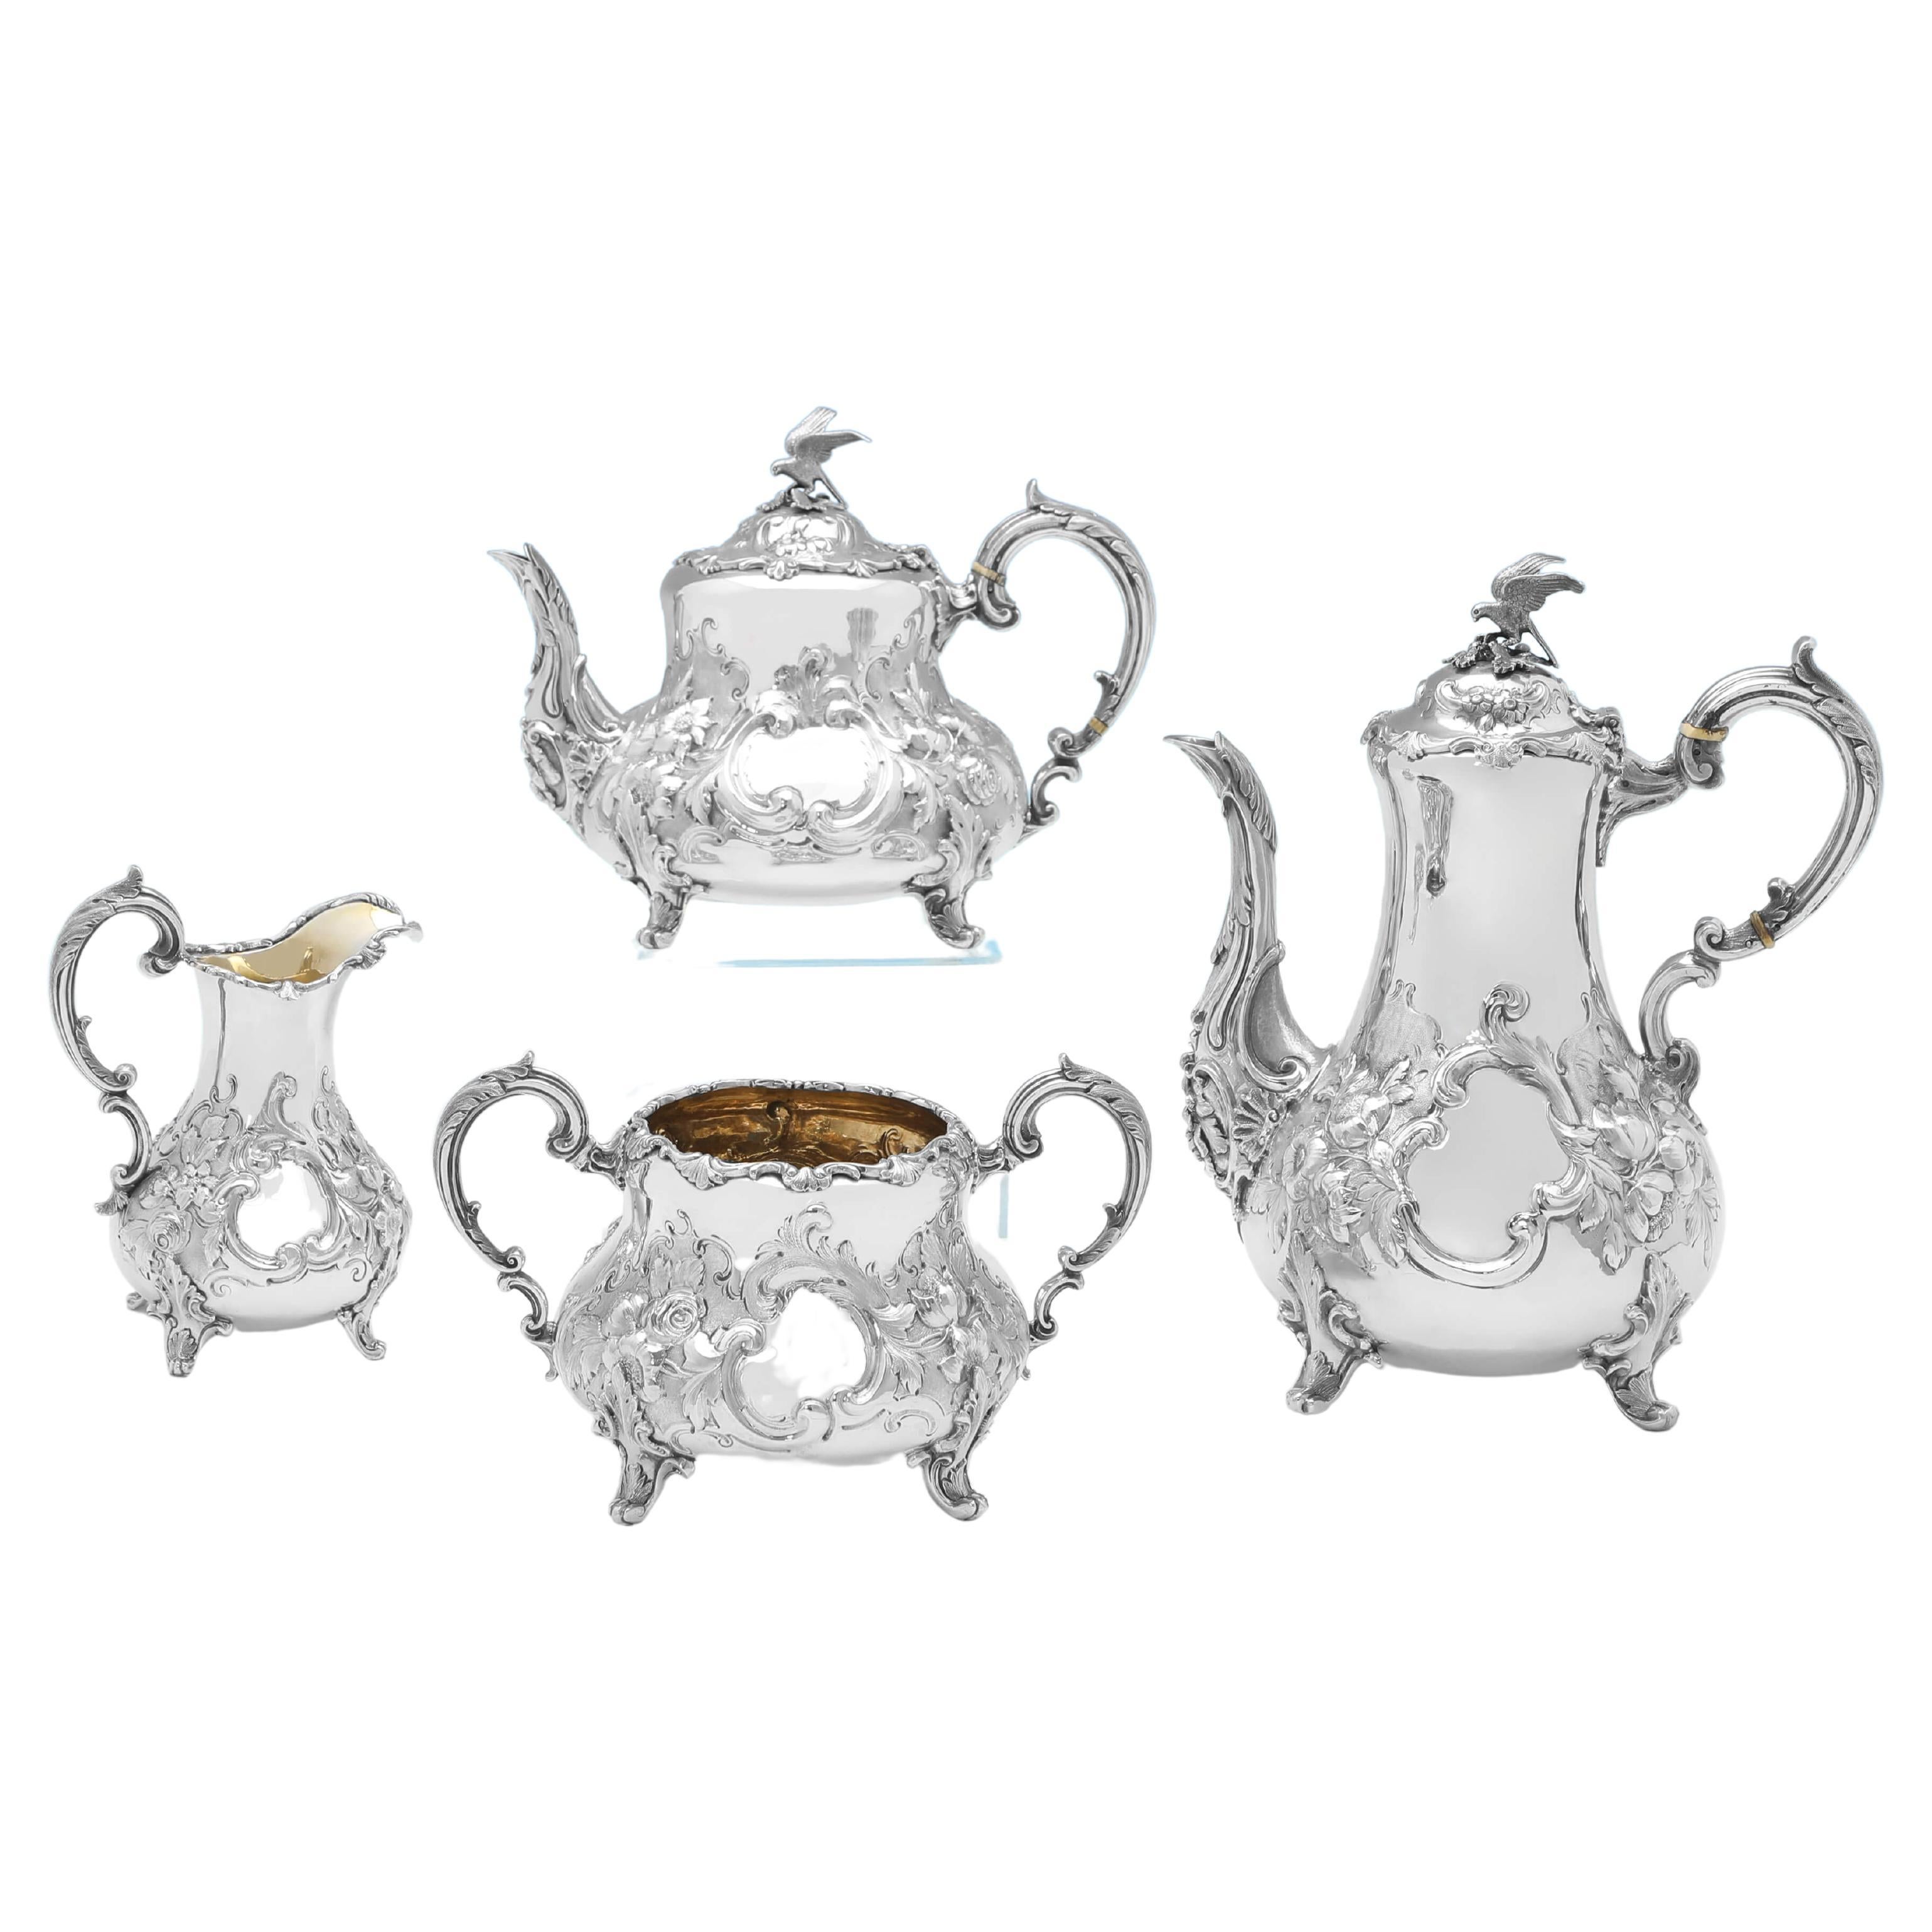 Victorian Sterling Silver Tea & Coffee Set, London, 1854-1855